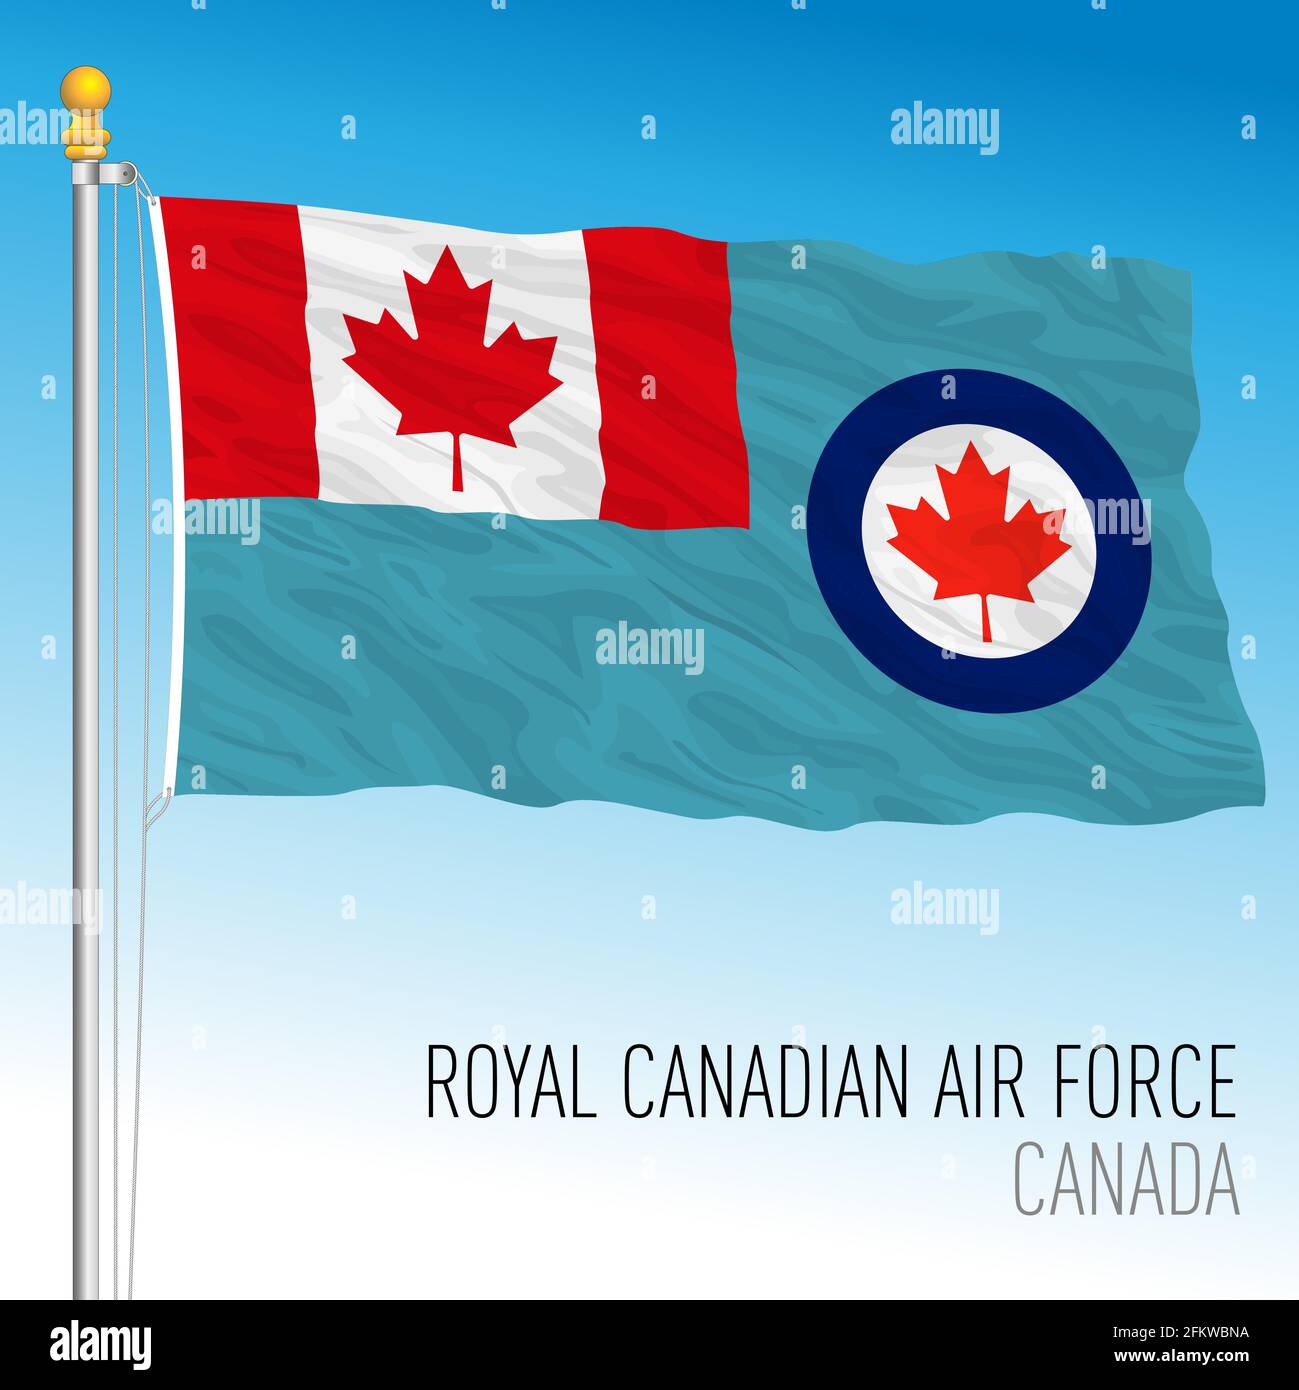 Royal Canadian Air Force flag, Canada, north america, vector illustration Stock Vector